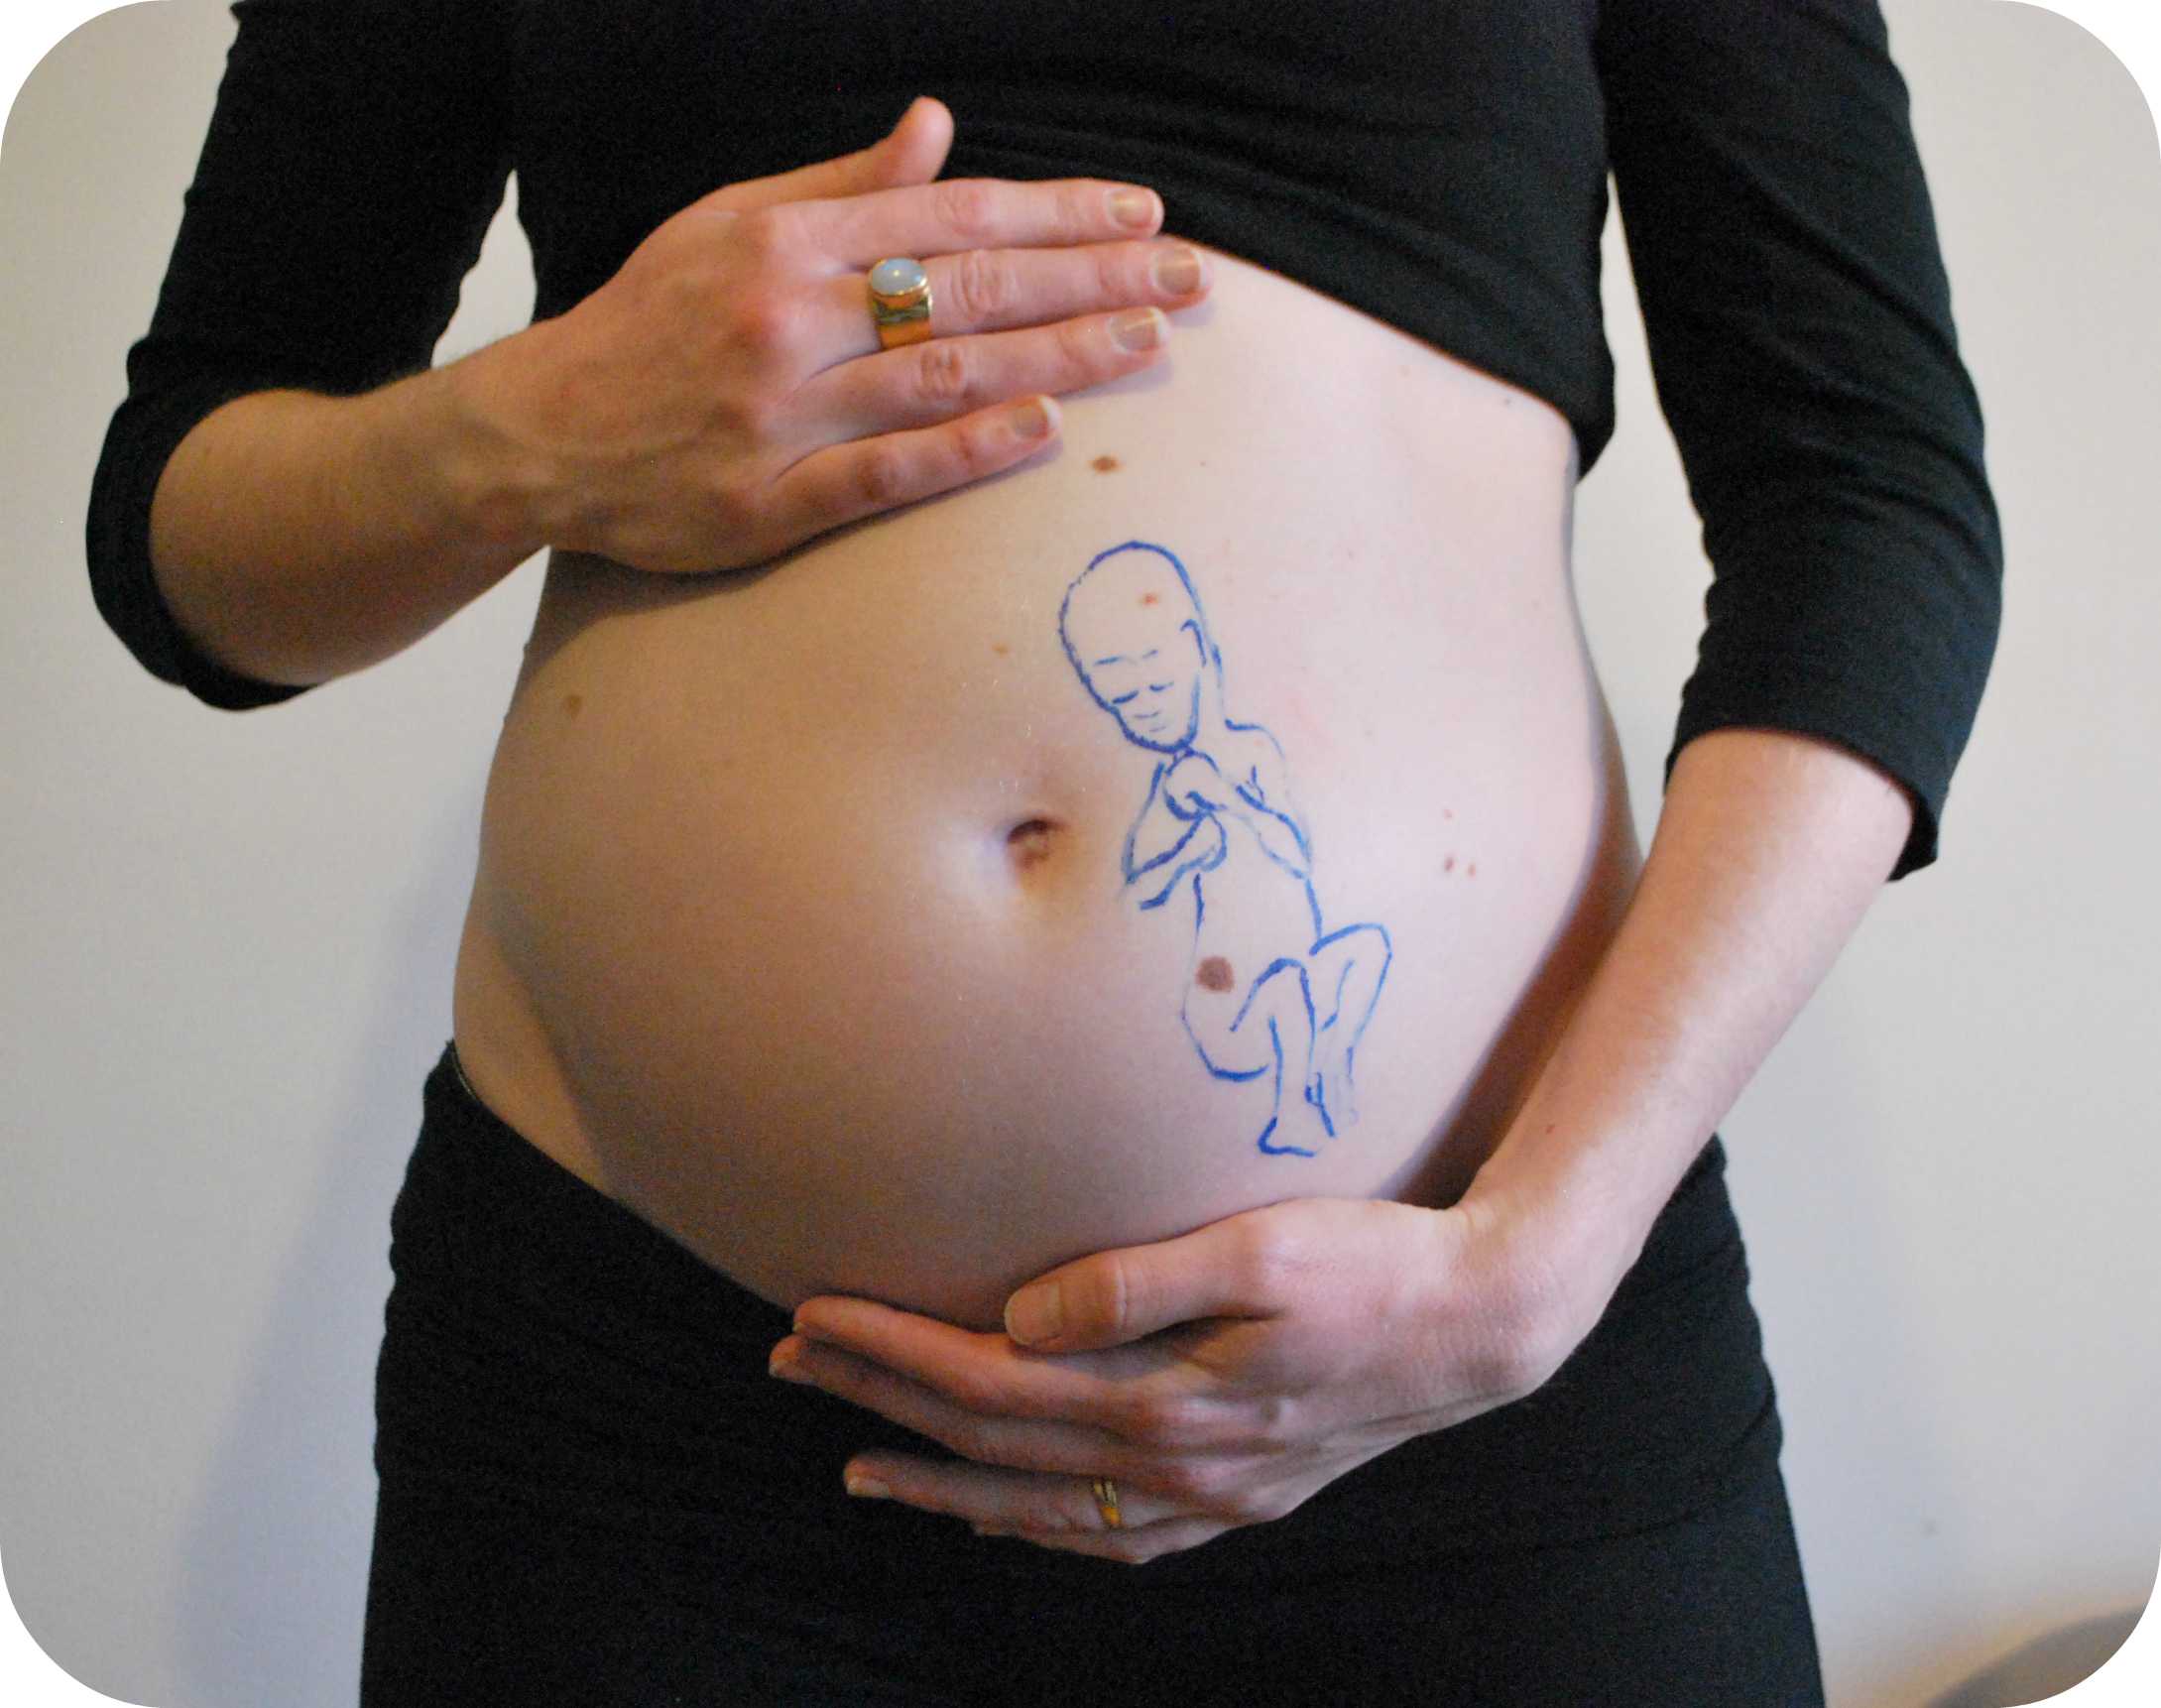 Узи на 13 неделе беременности: размер плода и другие особенности